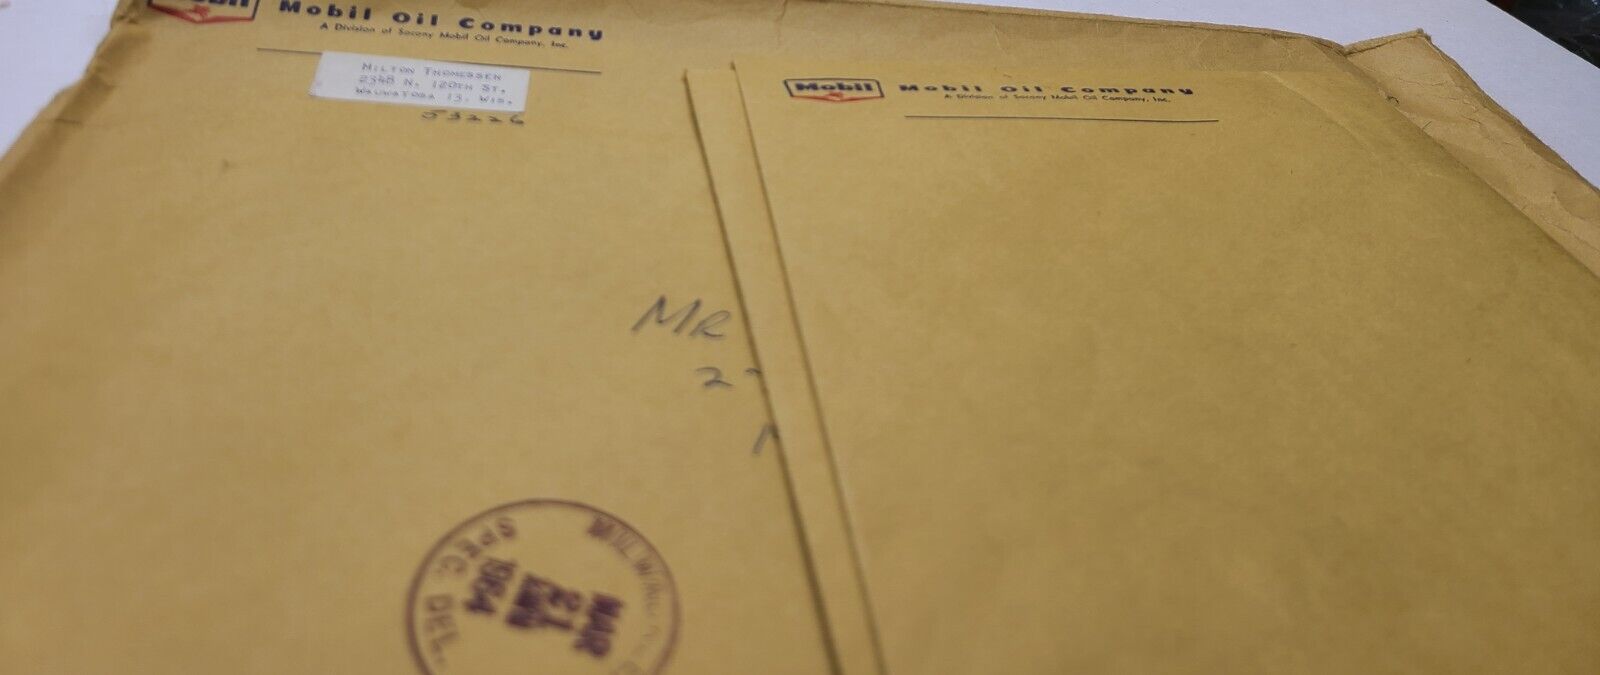 2 Vintage 1964 Mobil Oil Company Inc Oversized Envelopes 10x13 Inch 1 Unused